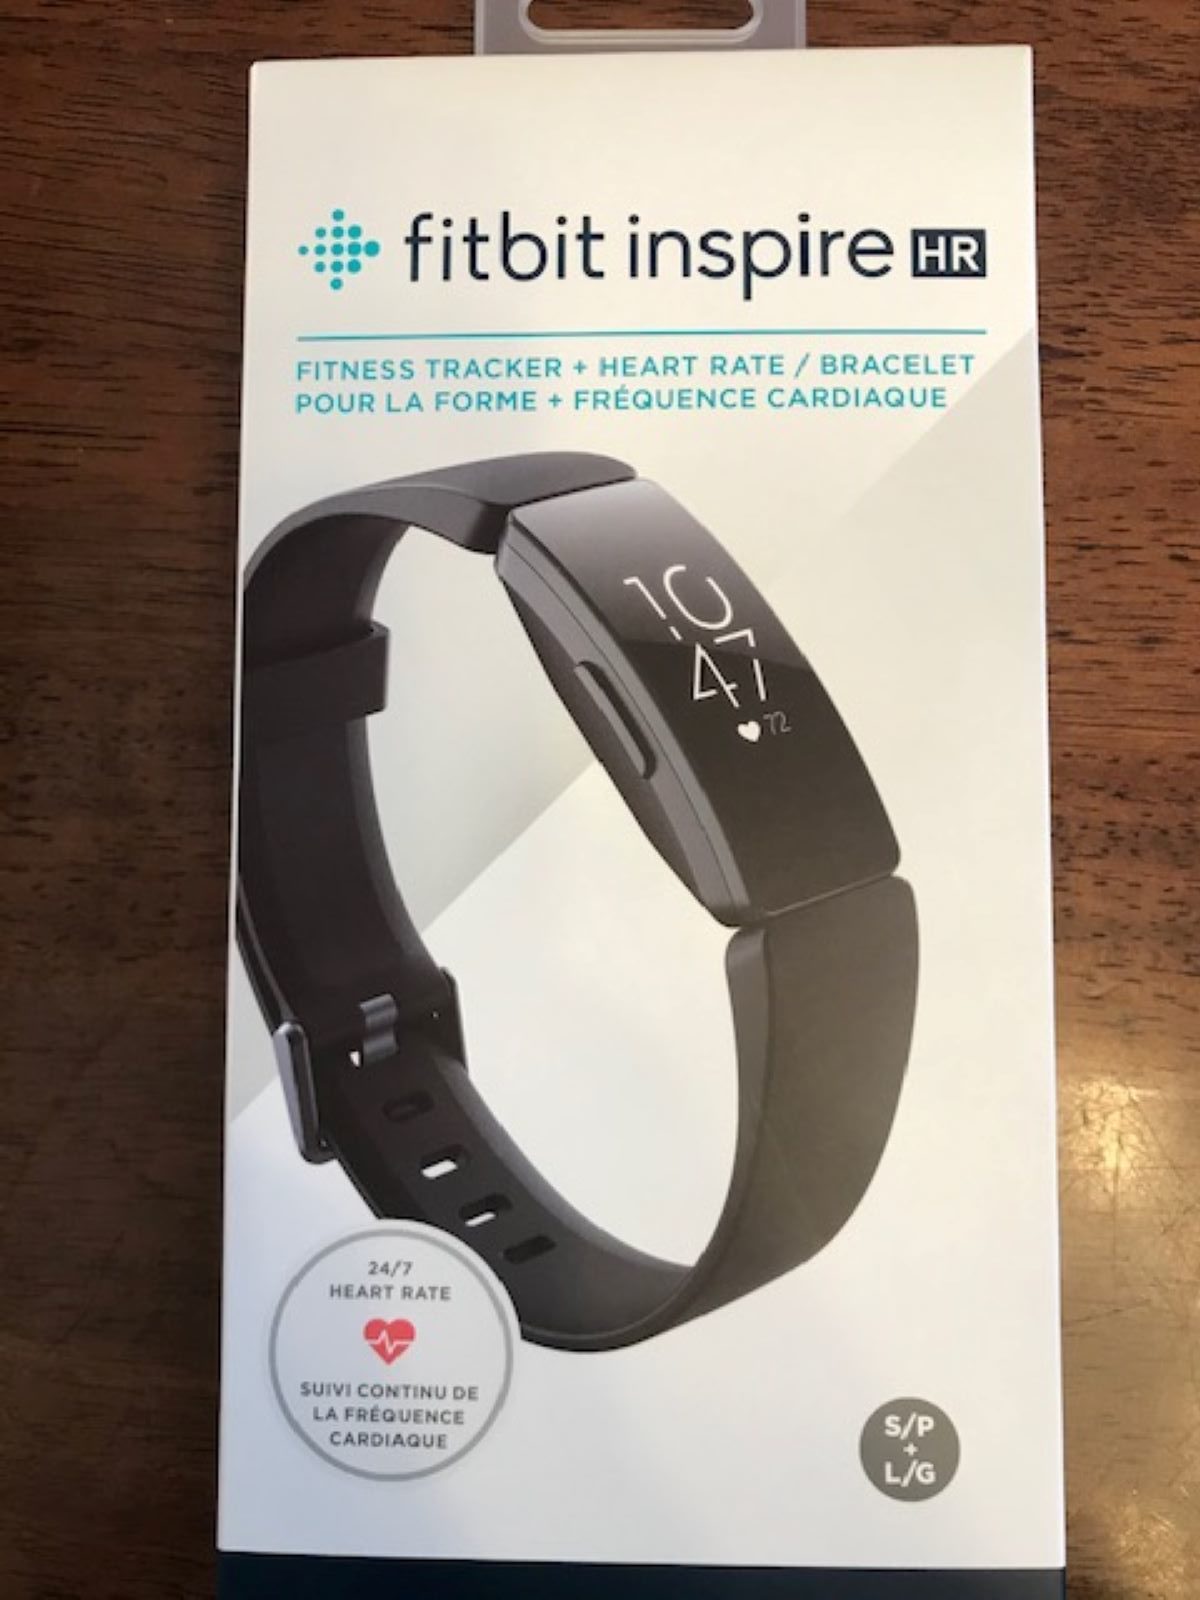 Fitbit Inspire HR を使ってみた体験談、レビュー